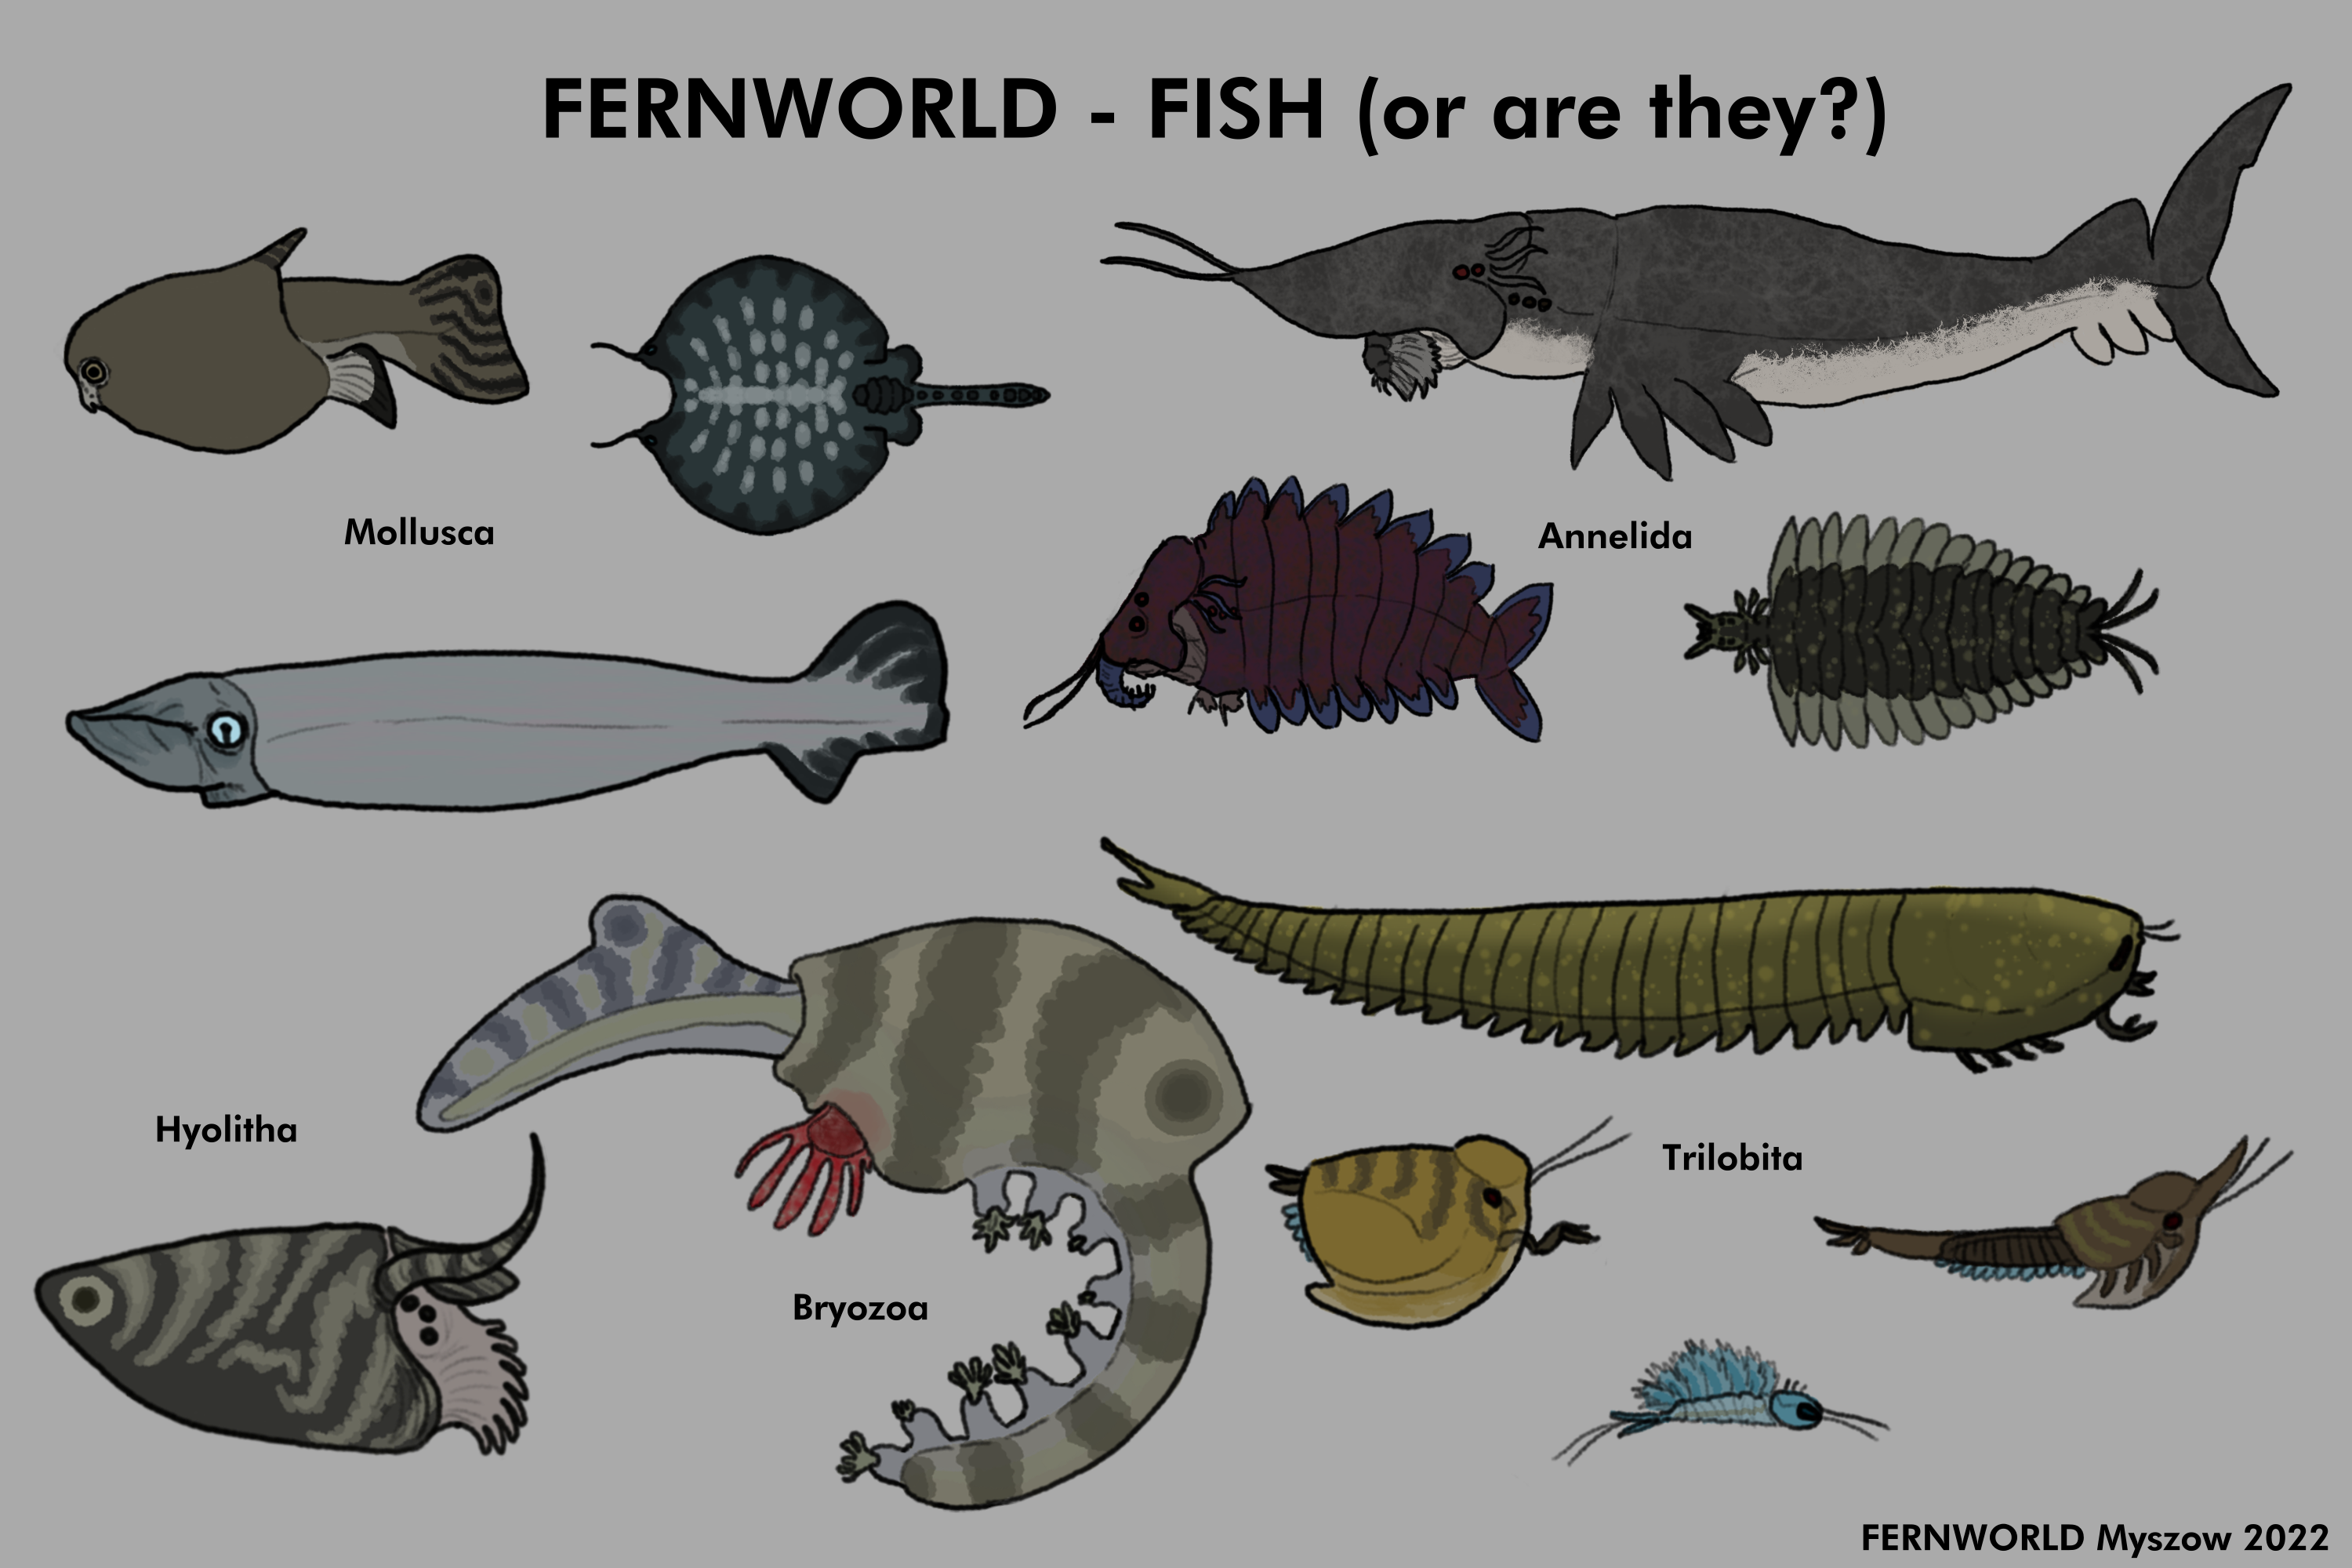 Fernworld - Pelagic fish equivalents by Myszow on DeviantArt